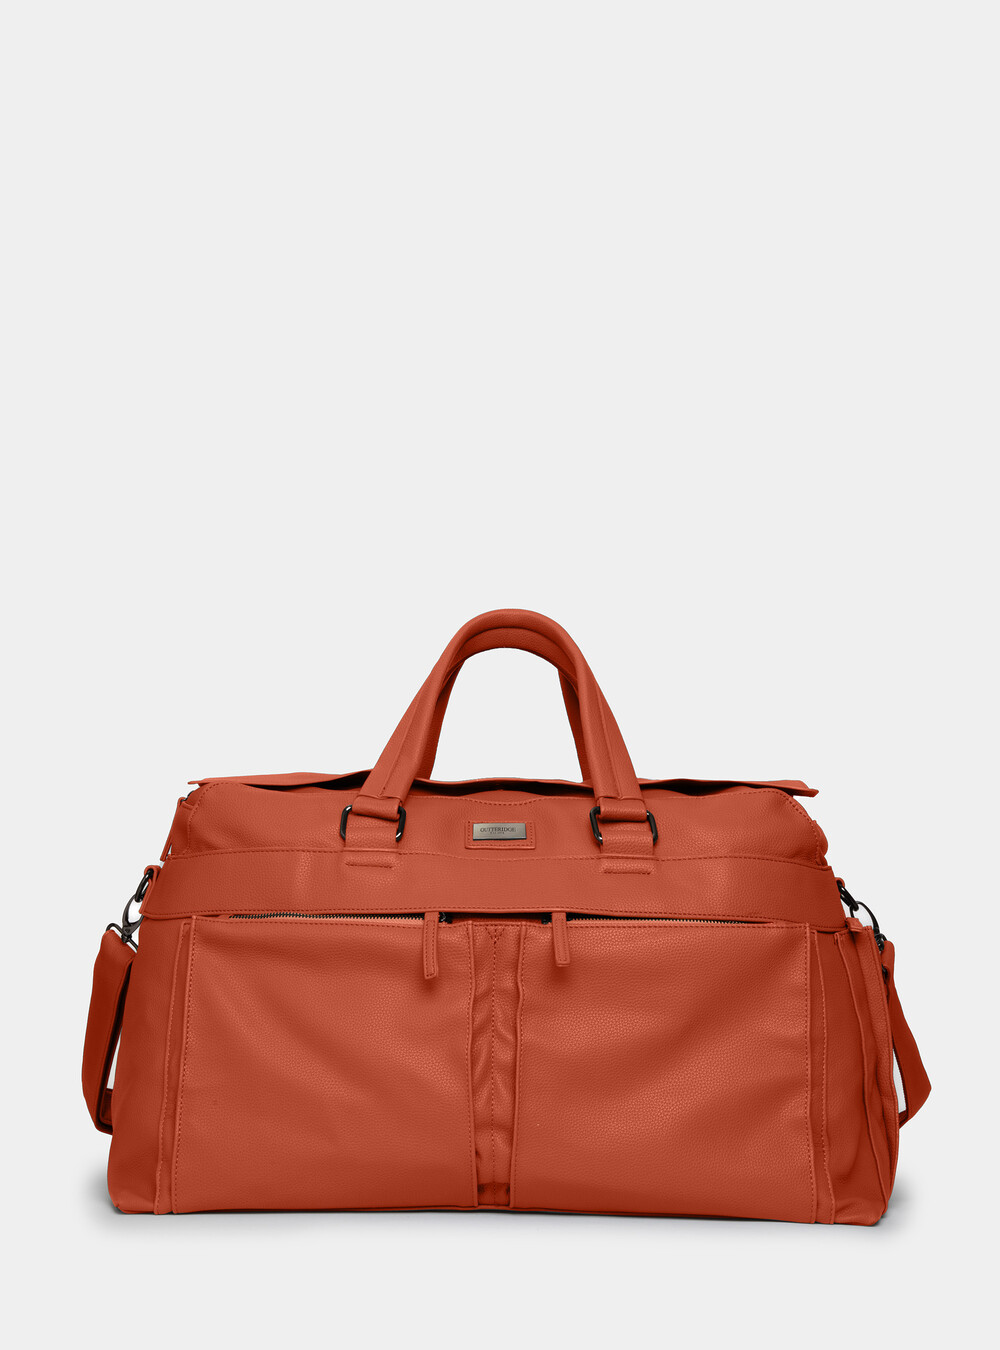 Travel bag | GutteridgeUS | Bags and Backpack Uomo